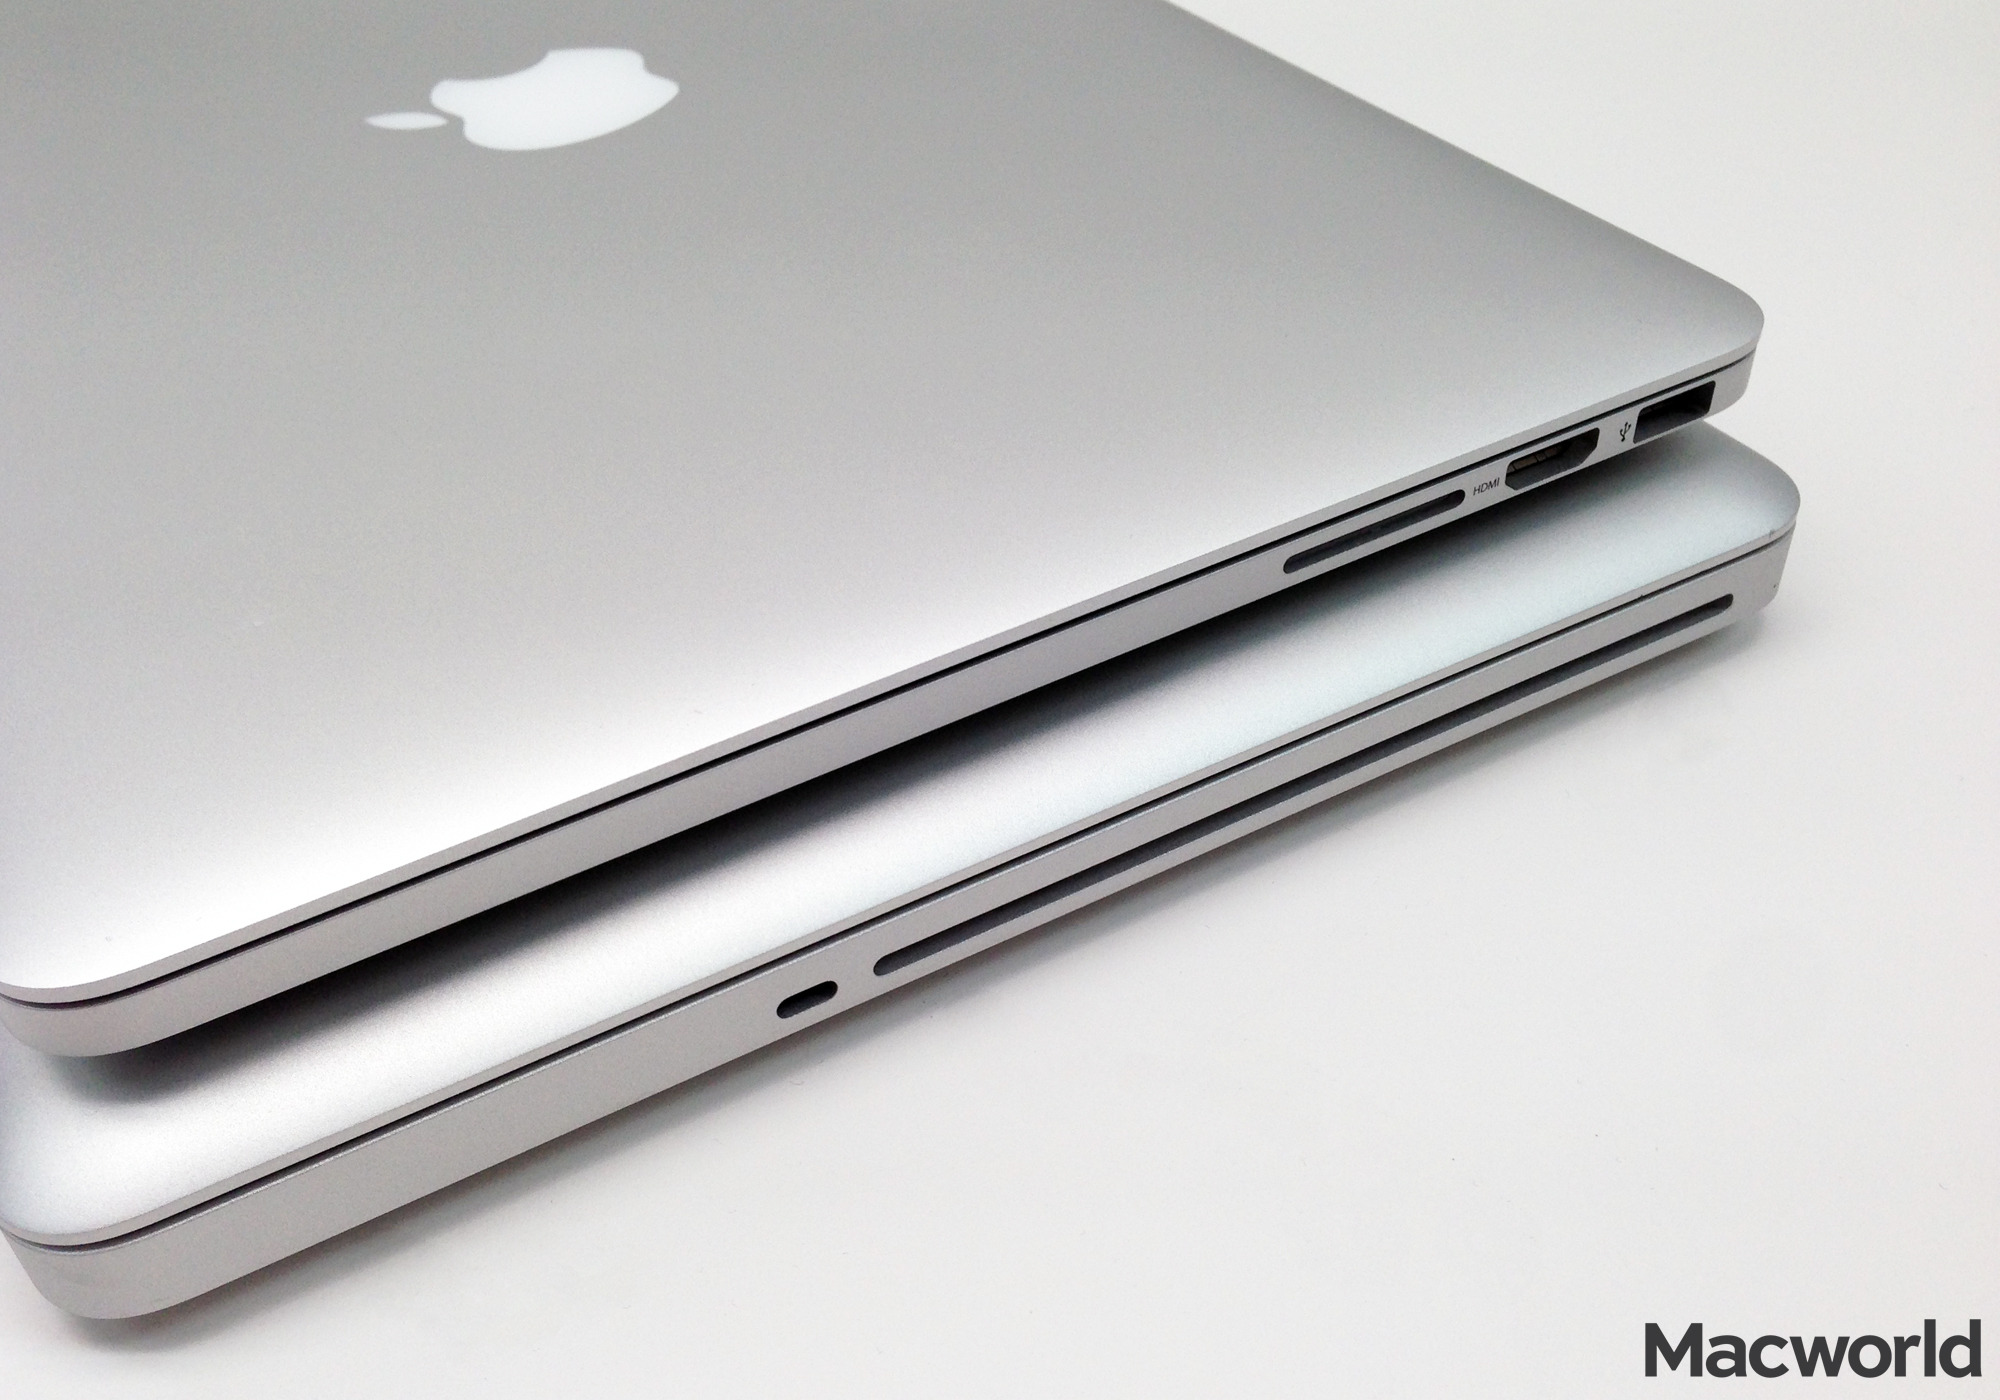 The 12inch Retina MacBook Rumor